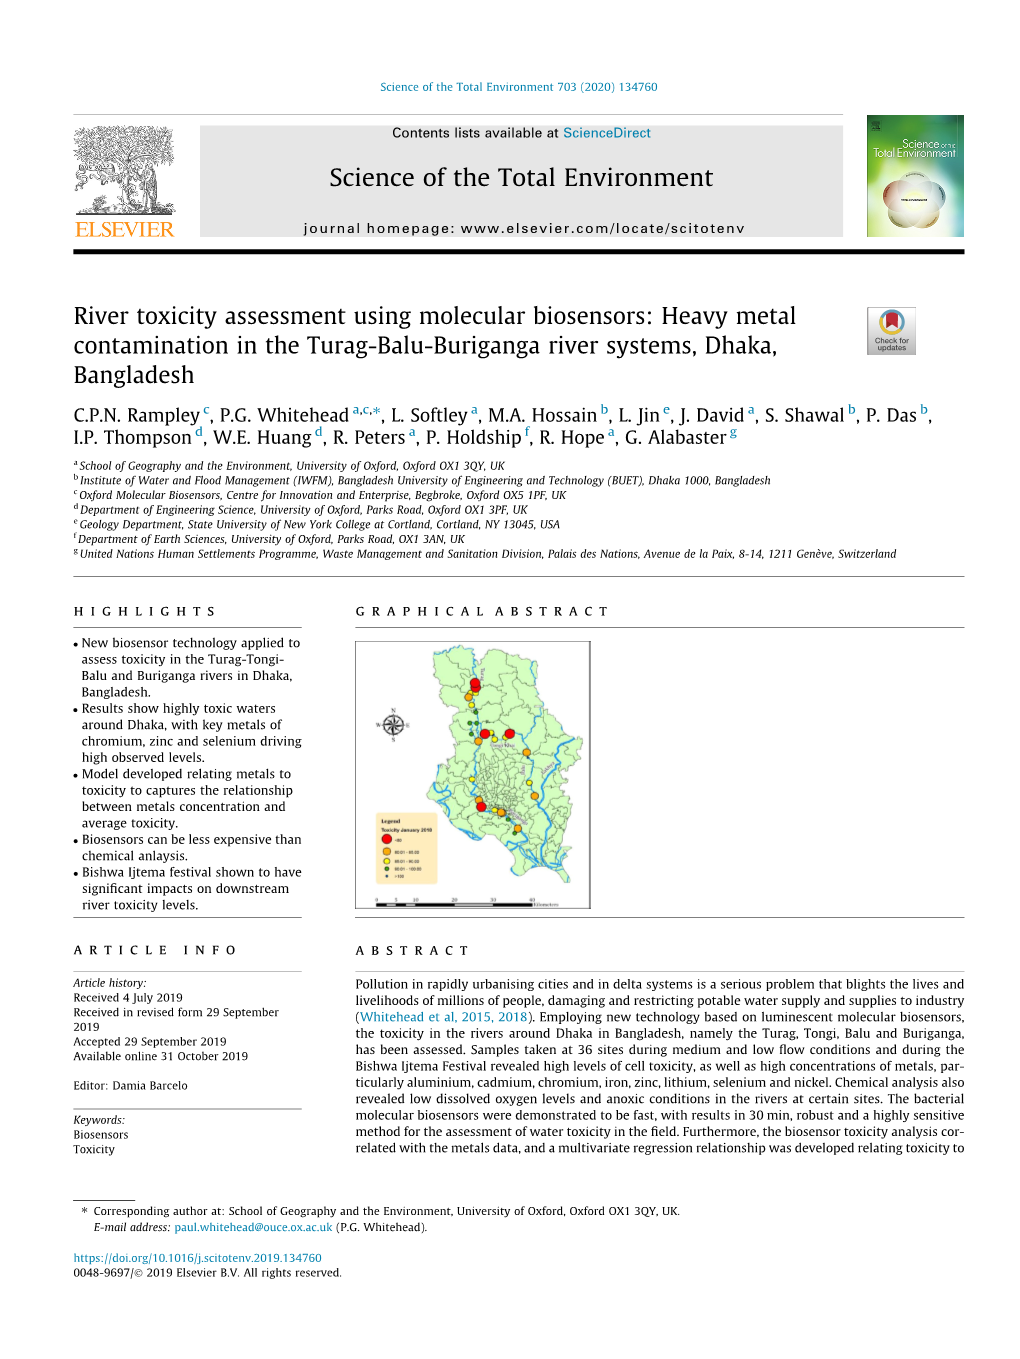 River Toxicity Assessment Using Molecular Biosensors: Heavy Metal Contamination in the Turag-Balu-Buriganga River Systems, Dhaka, Bangladesh ⇑ C.P.N